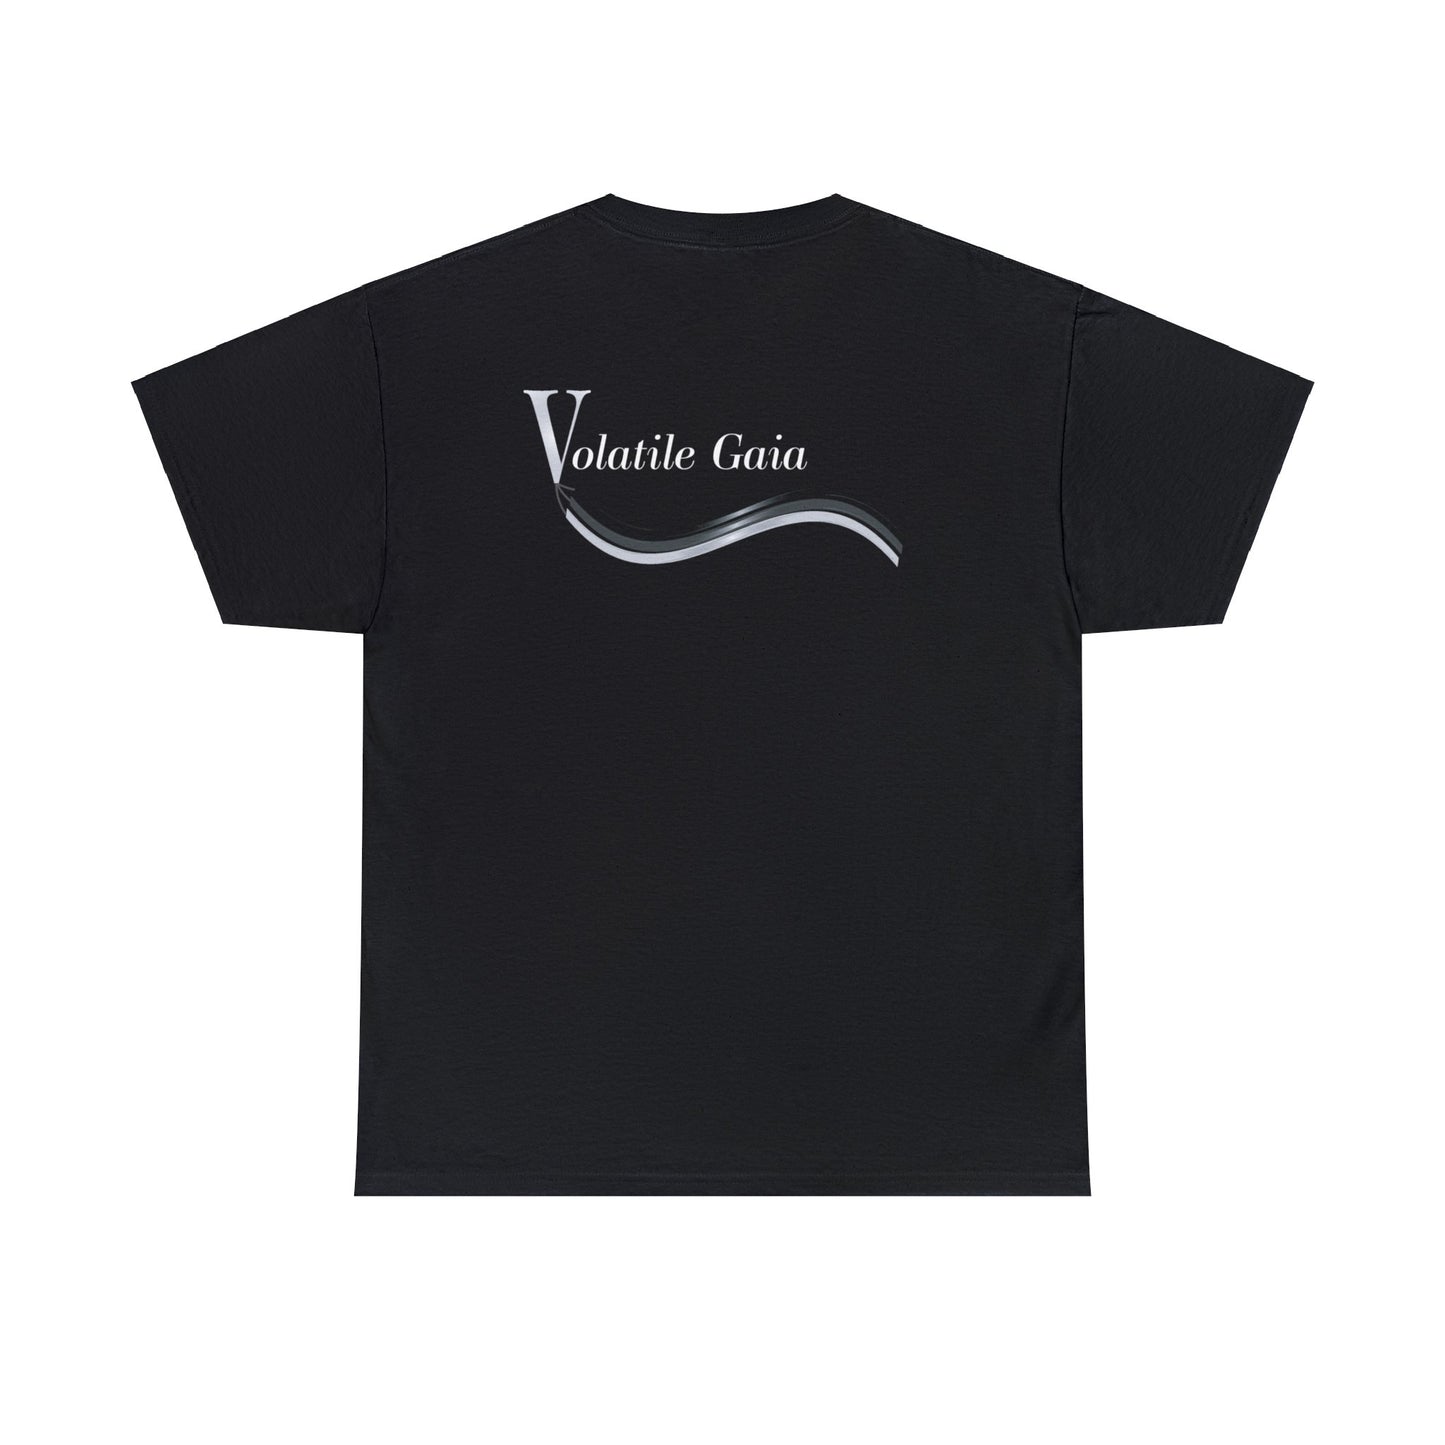 Volatile Gaia Shirt